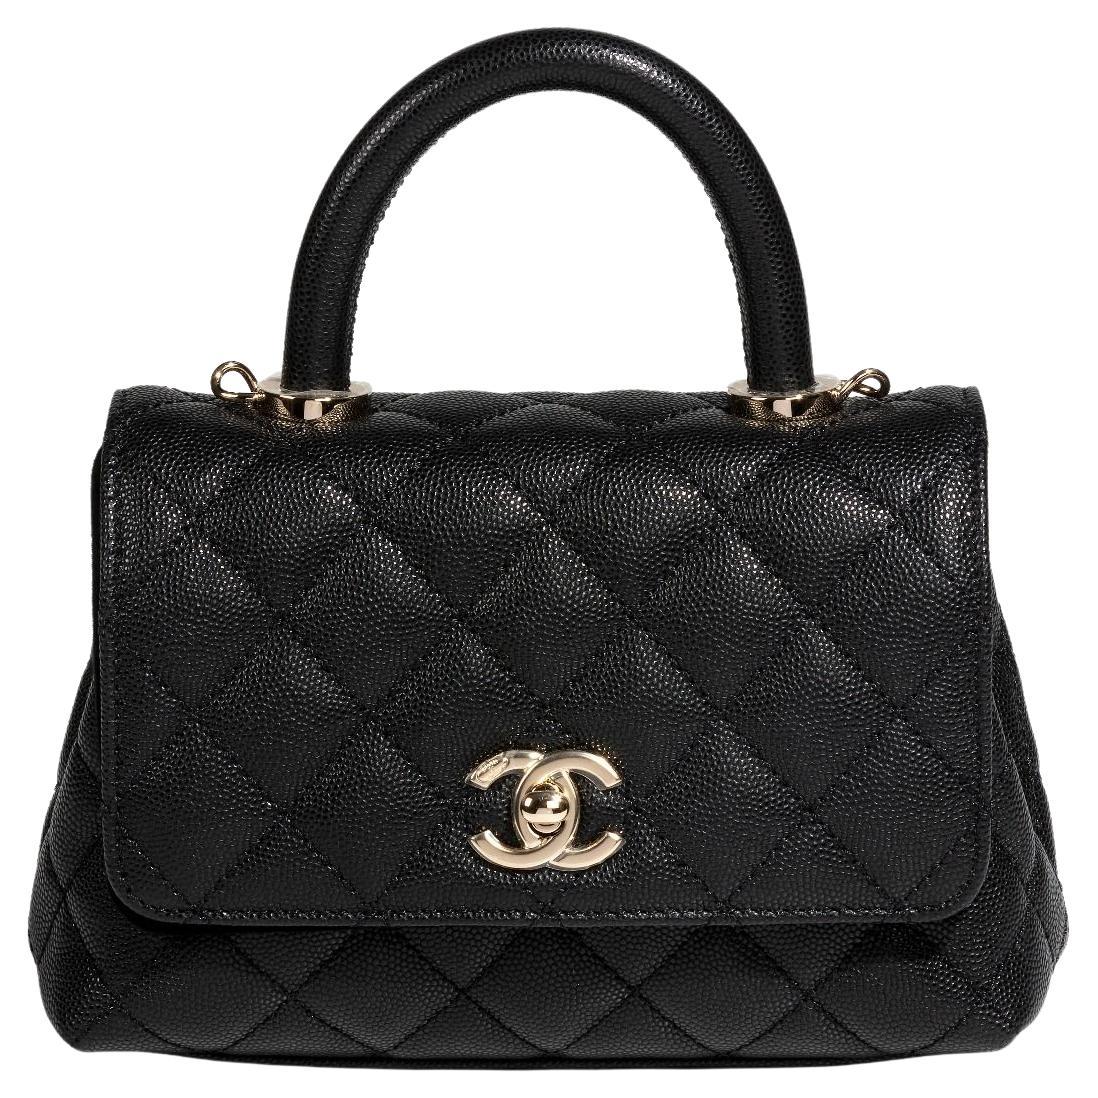 Chanel caviar top handle bag 